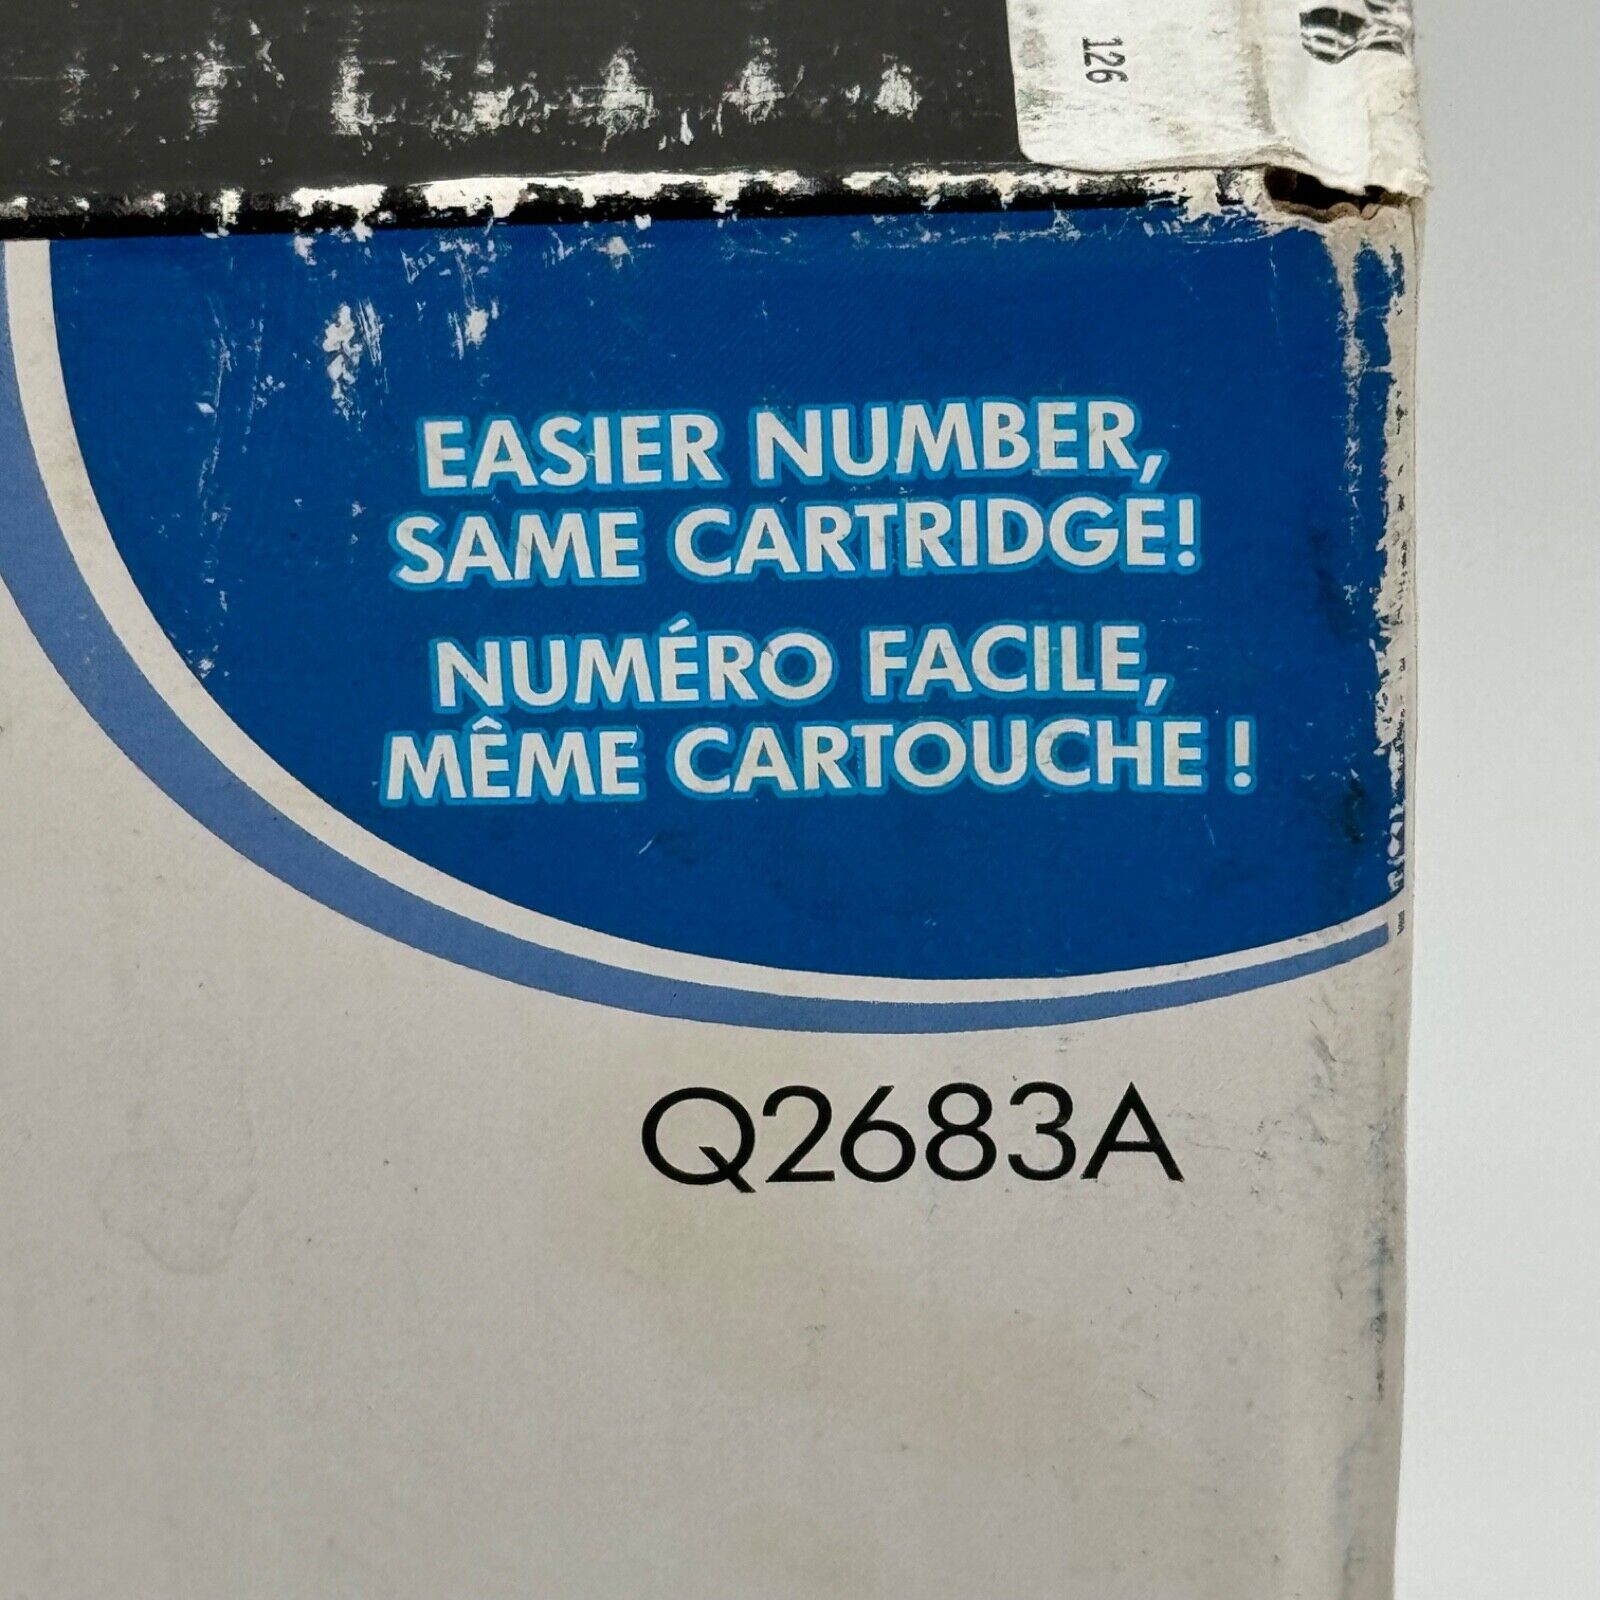 HP Genuine New Sealed Q2683A 311A Magenta Toner Cartridge